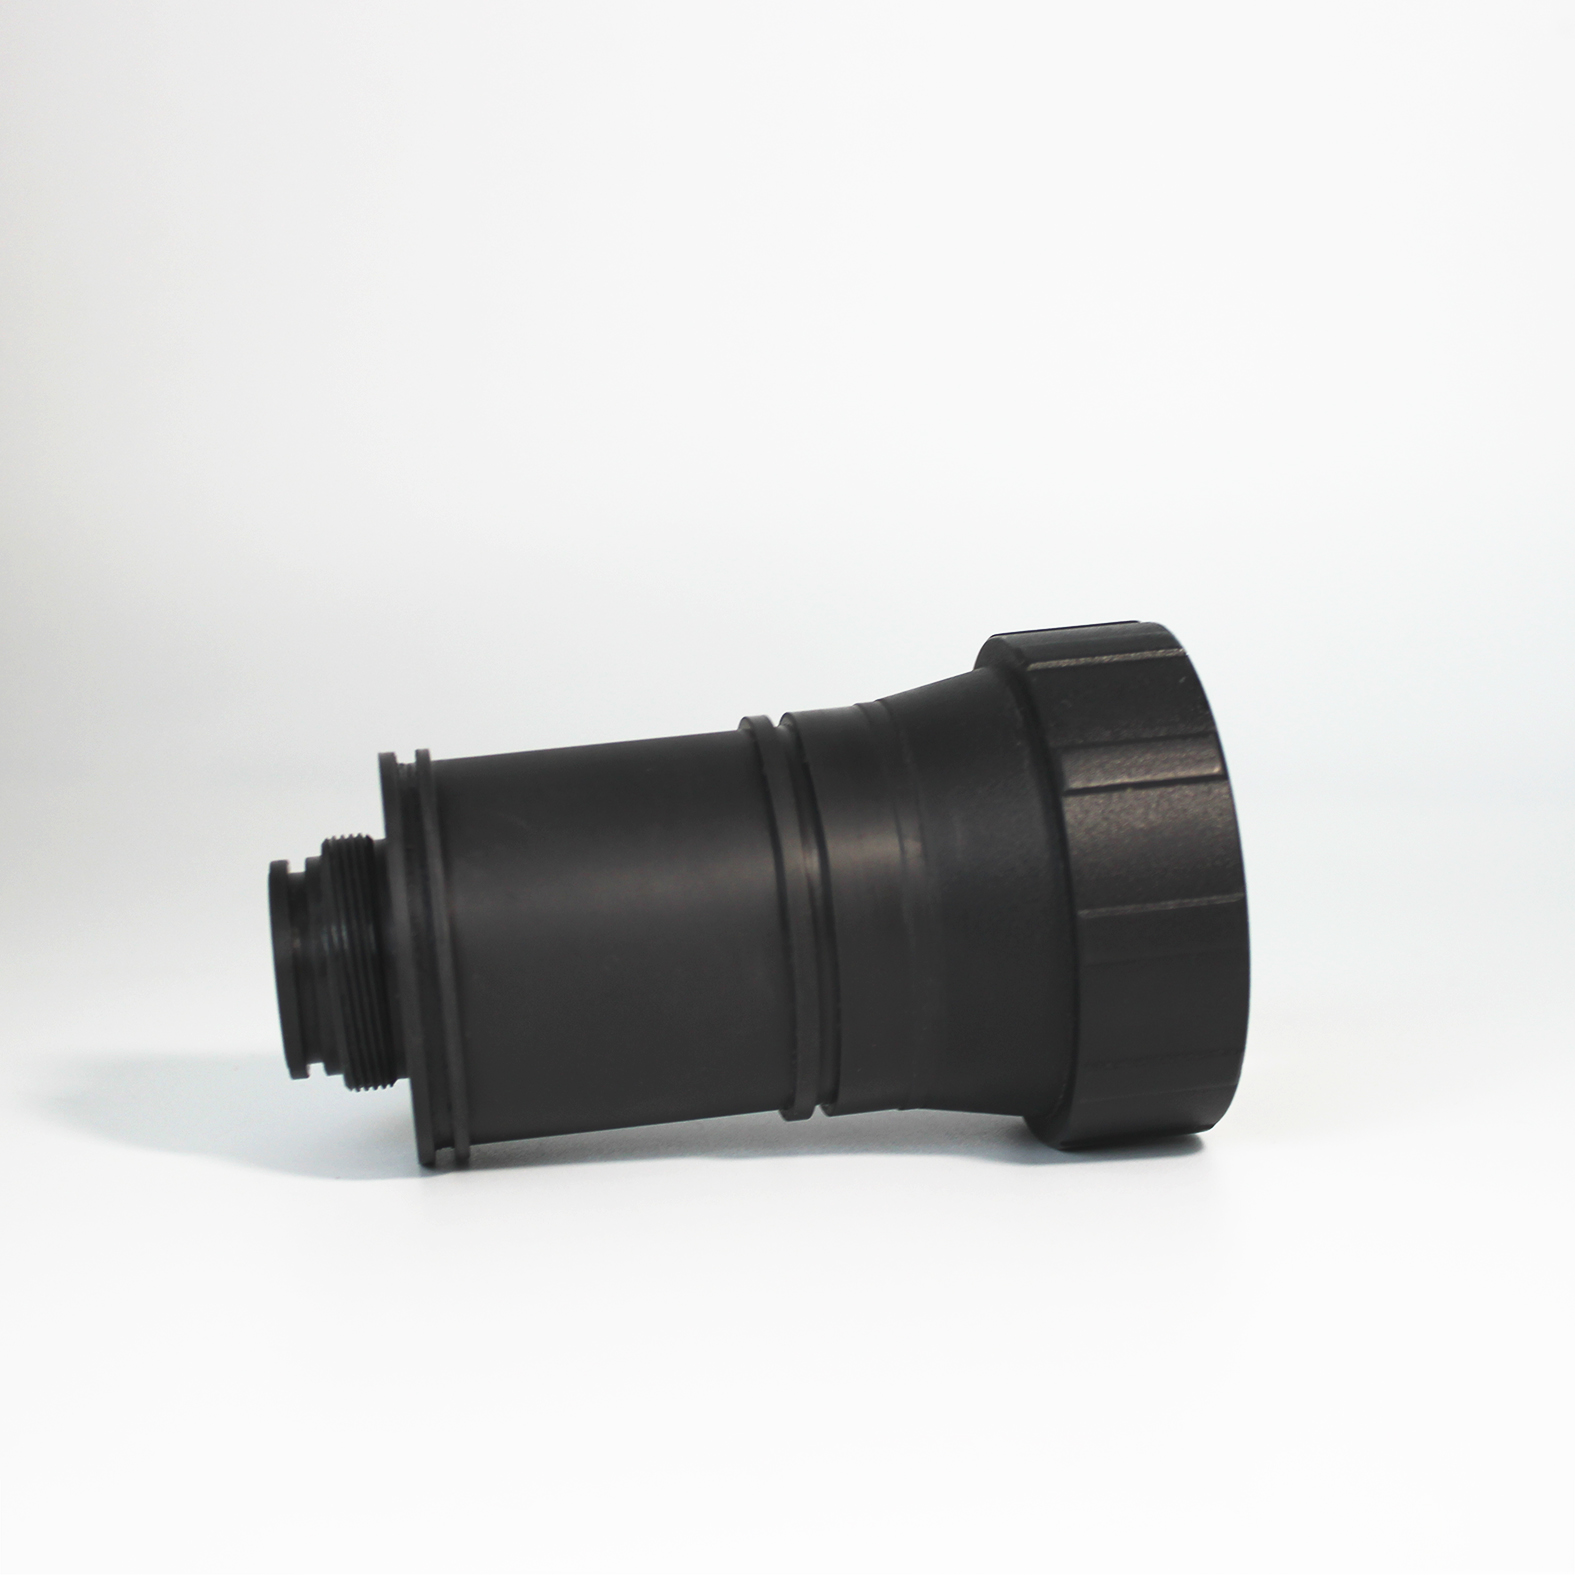 Low Light Night Vision Binoculars Lens for Hunting